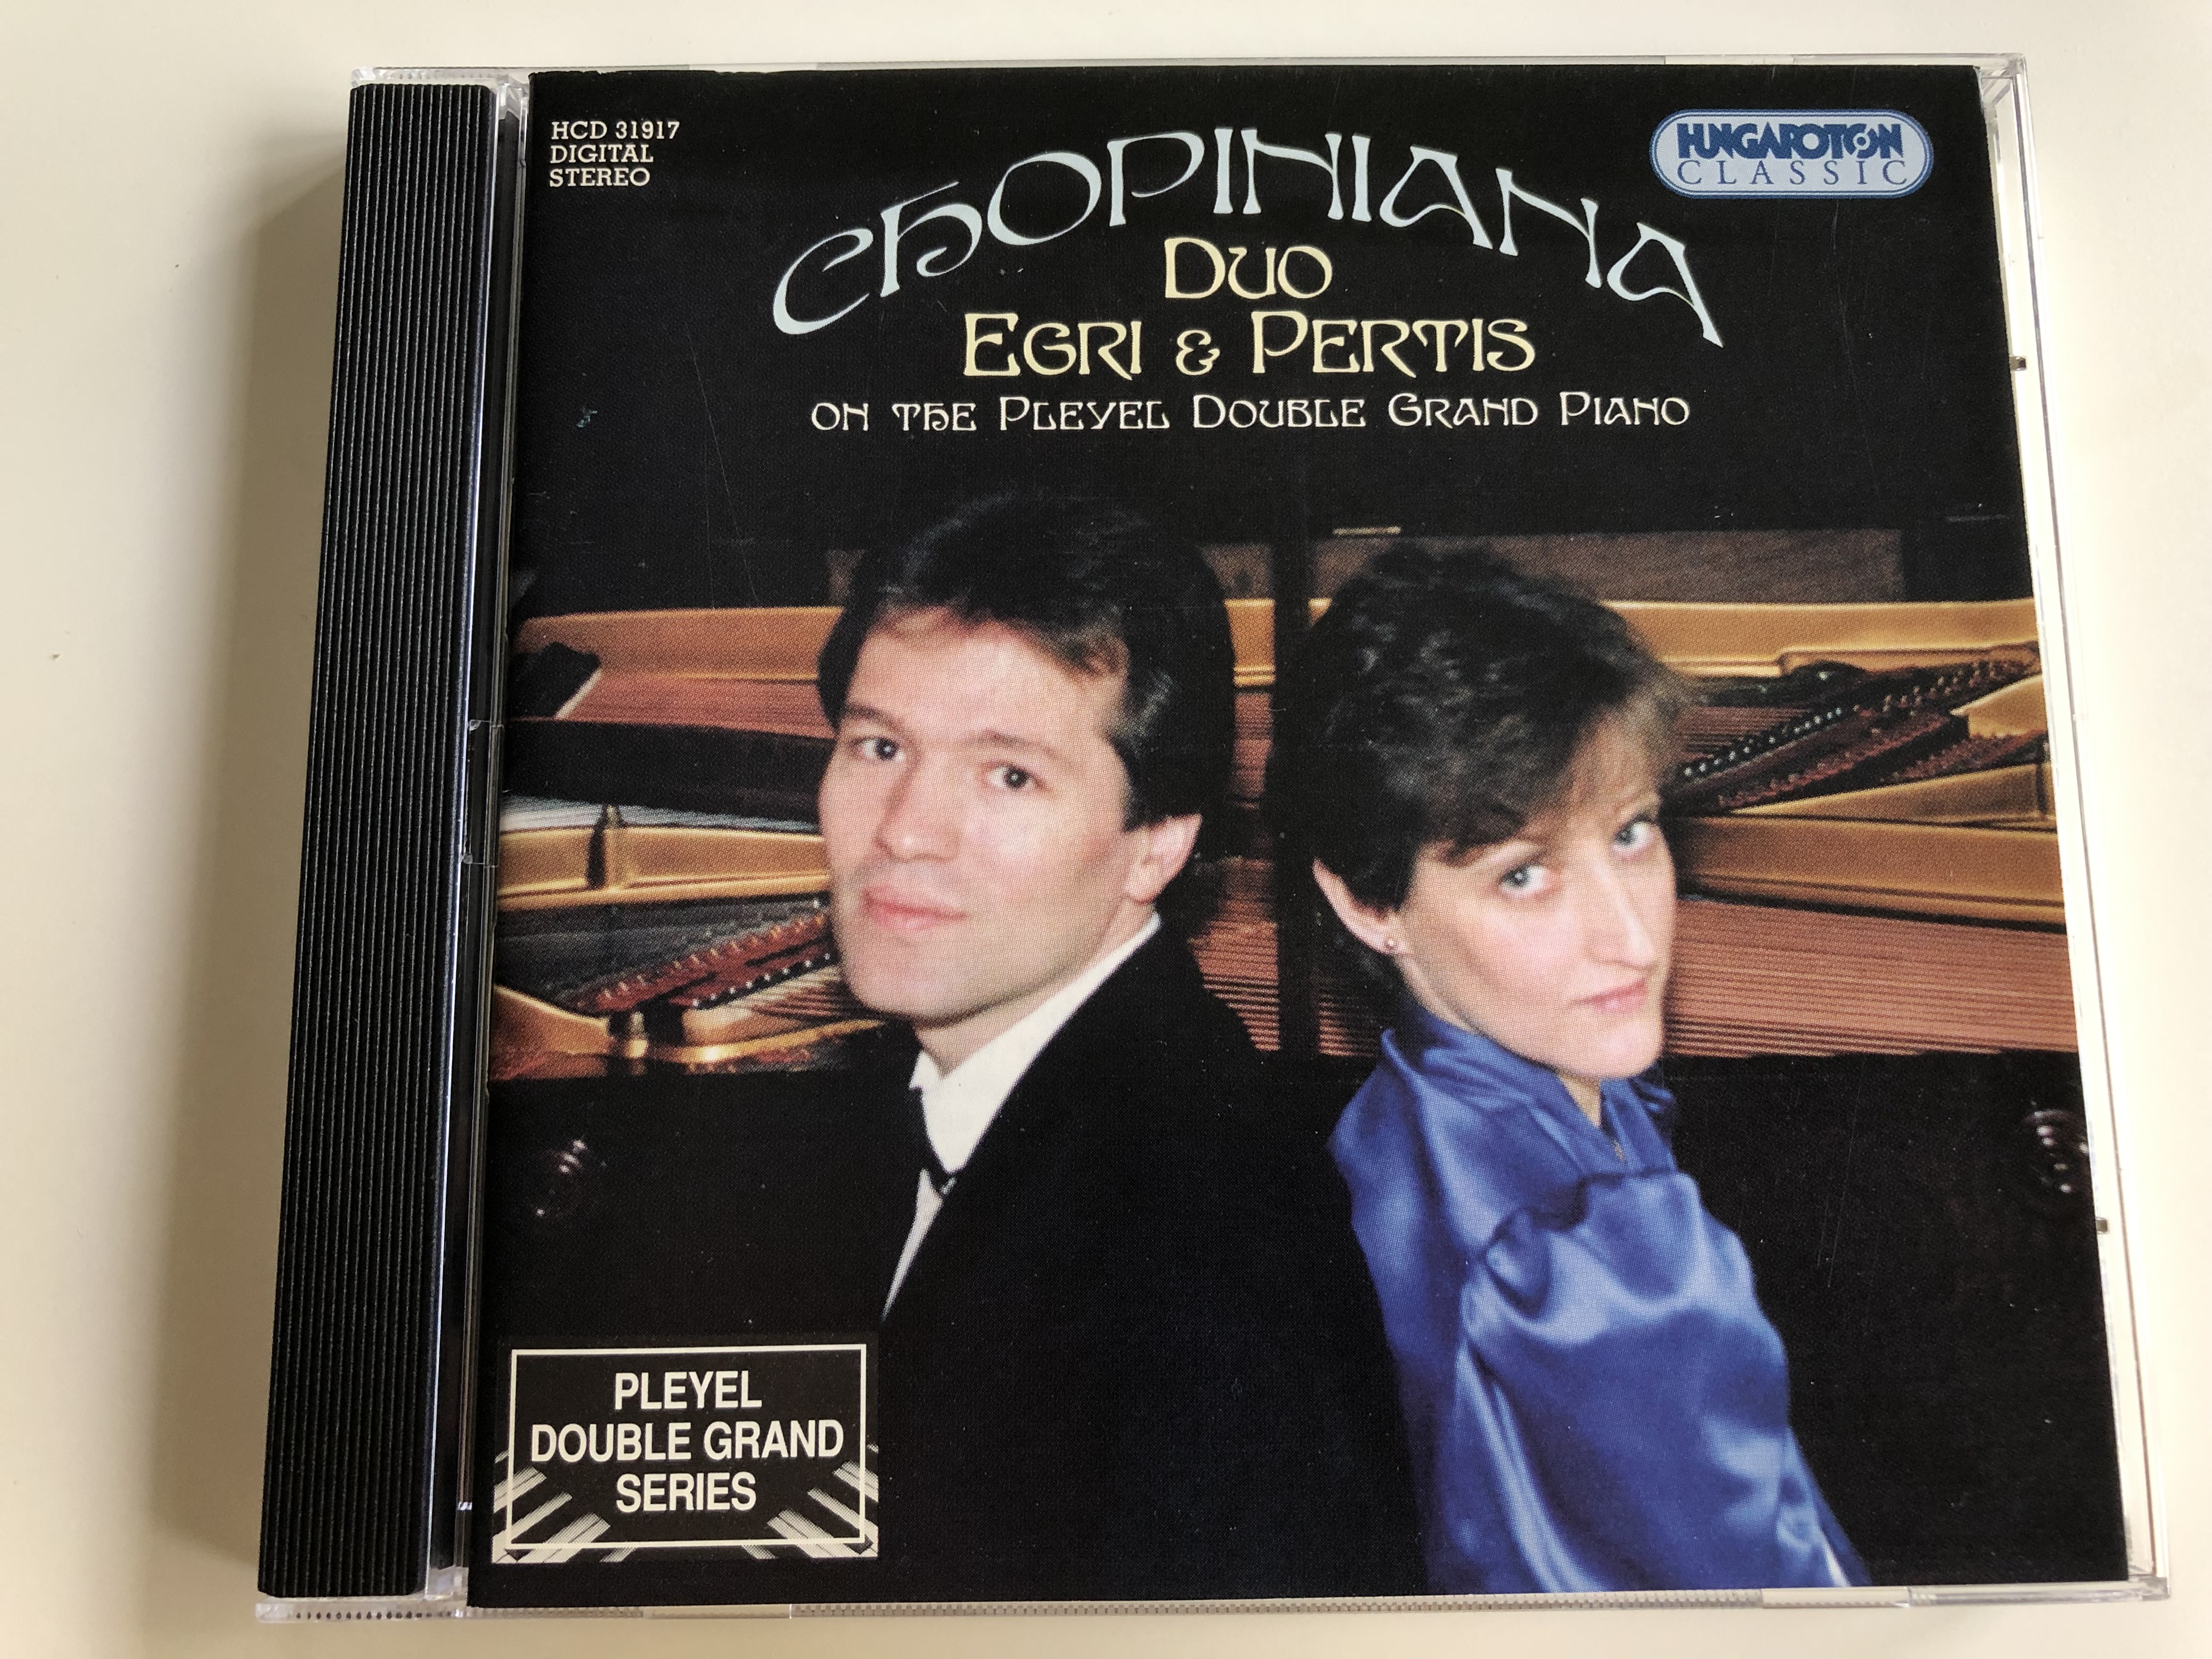 chopiniana-duet-and-duo-works-on-the-pleyel-double-grand-piano-duo-egri-pertis-hungaroton-hcd-31917-audio-cd-2000-1-.jpg